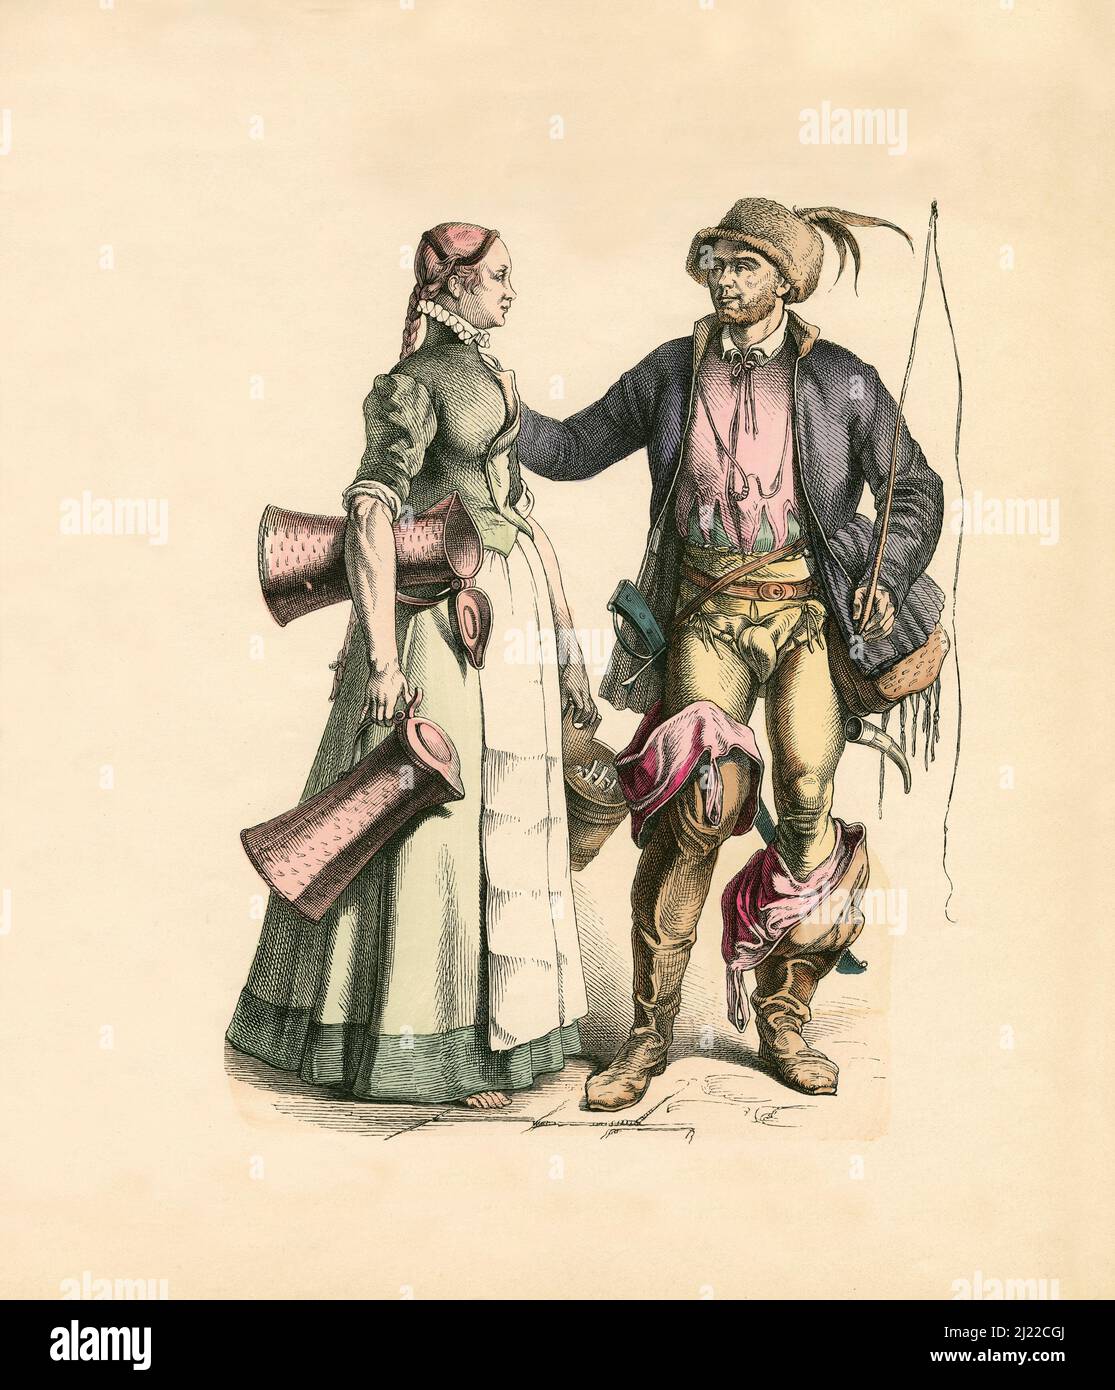 Nuremberg Maid and Cart Driver, dernier tiers du 16th siècle, Illustration, l'histoire du costume, Braun & Schneider, Munich, Allemagne, 1861-1880 Banque D'Images